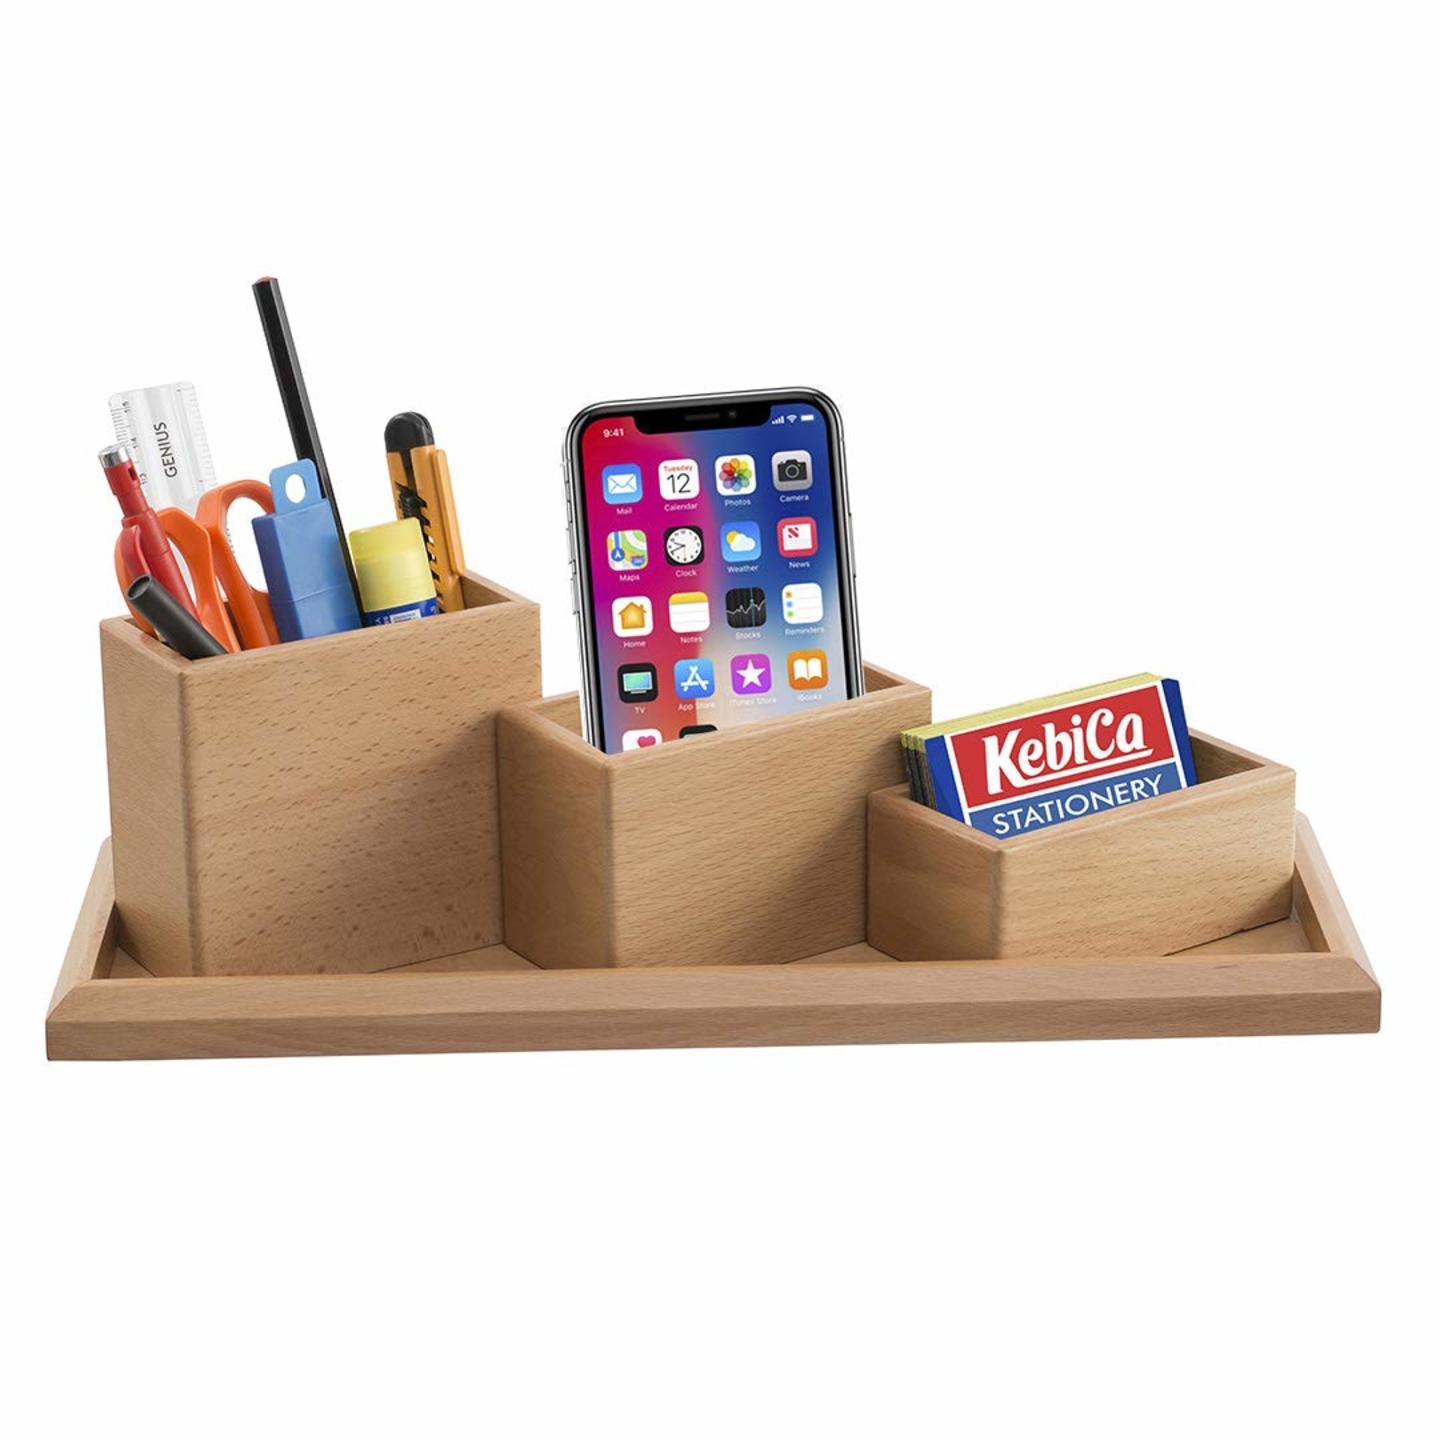 Kebica Wood Wooden Desk Organizer 4-Piece Set for Office Supplies, Pens, Business Card Holder, Mobile etc.